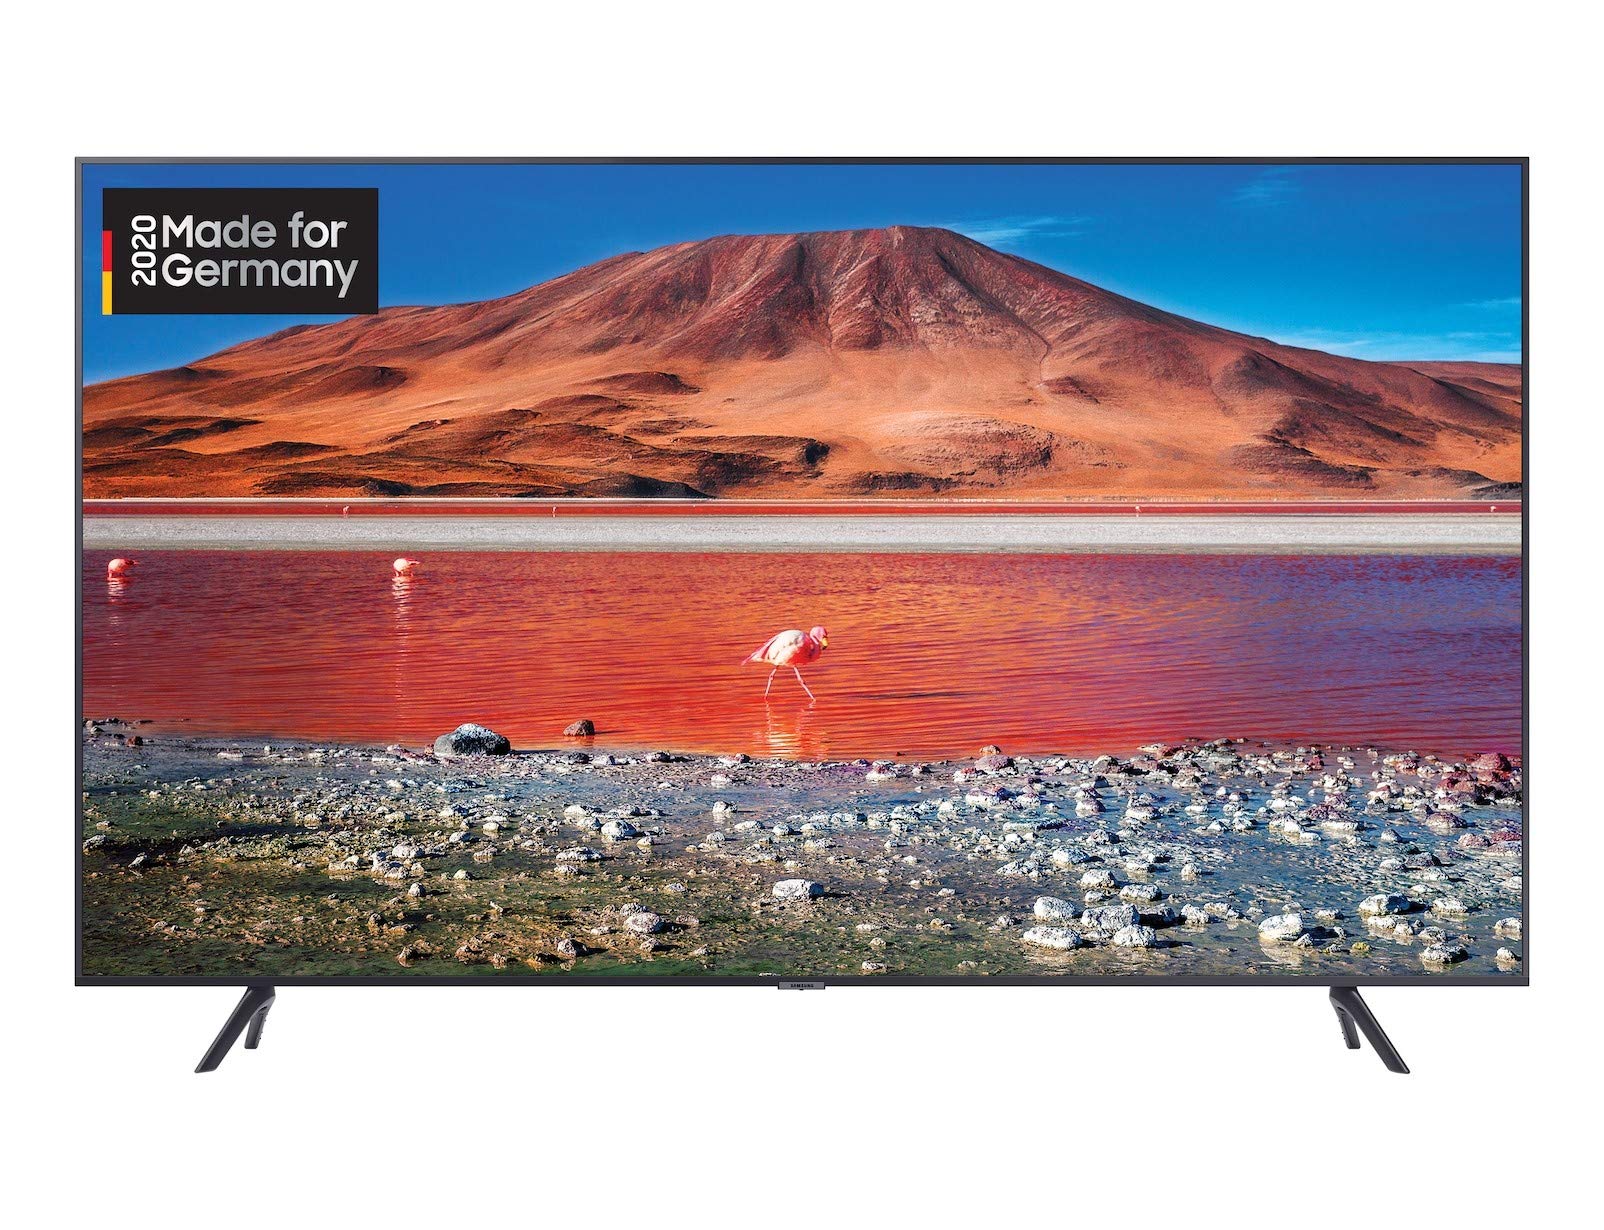 Samsung TU7199 125 cm (50 Zoll) LED Fernseher (Ultra HD, HDR10+, Triple Tuner, Smart TV) [Modelljahr 2020]